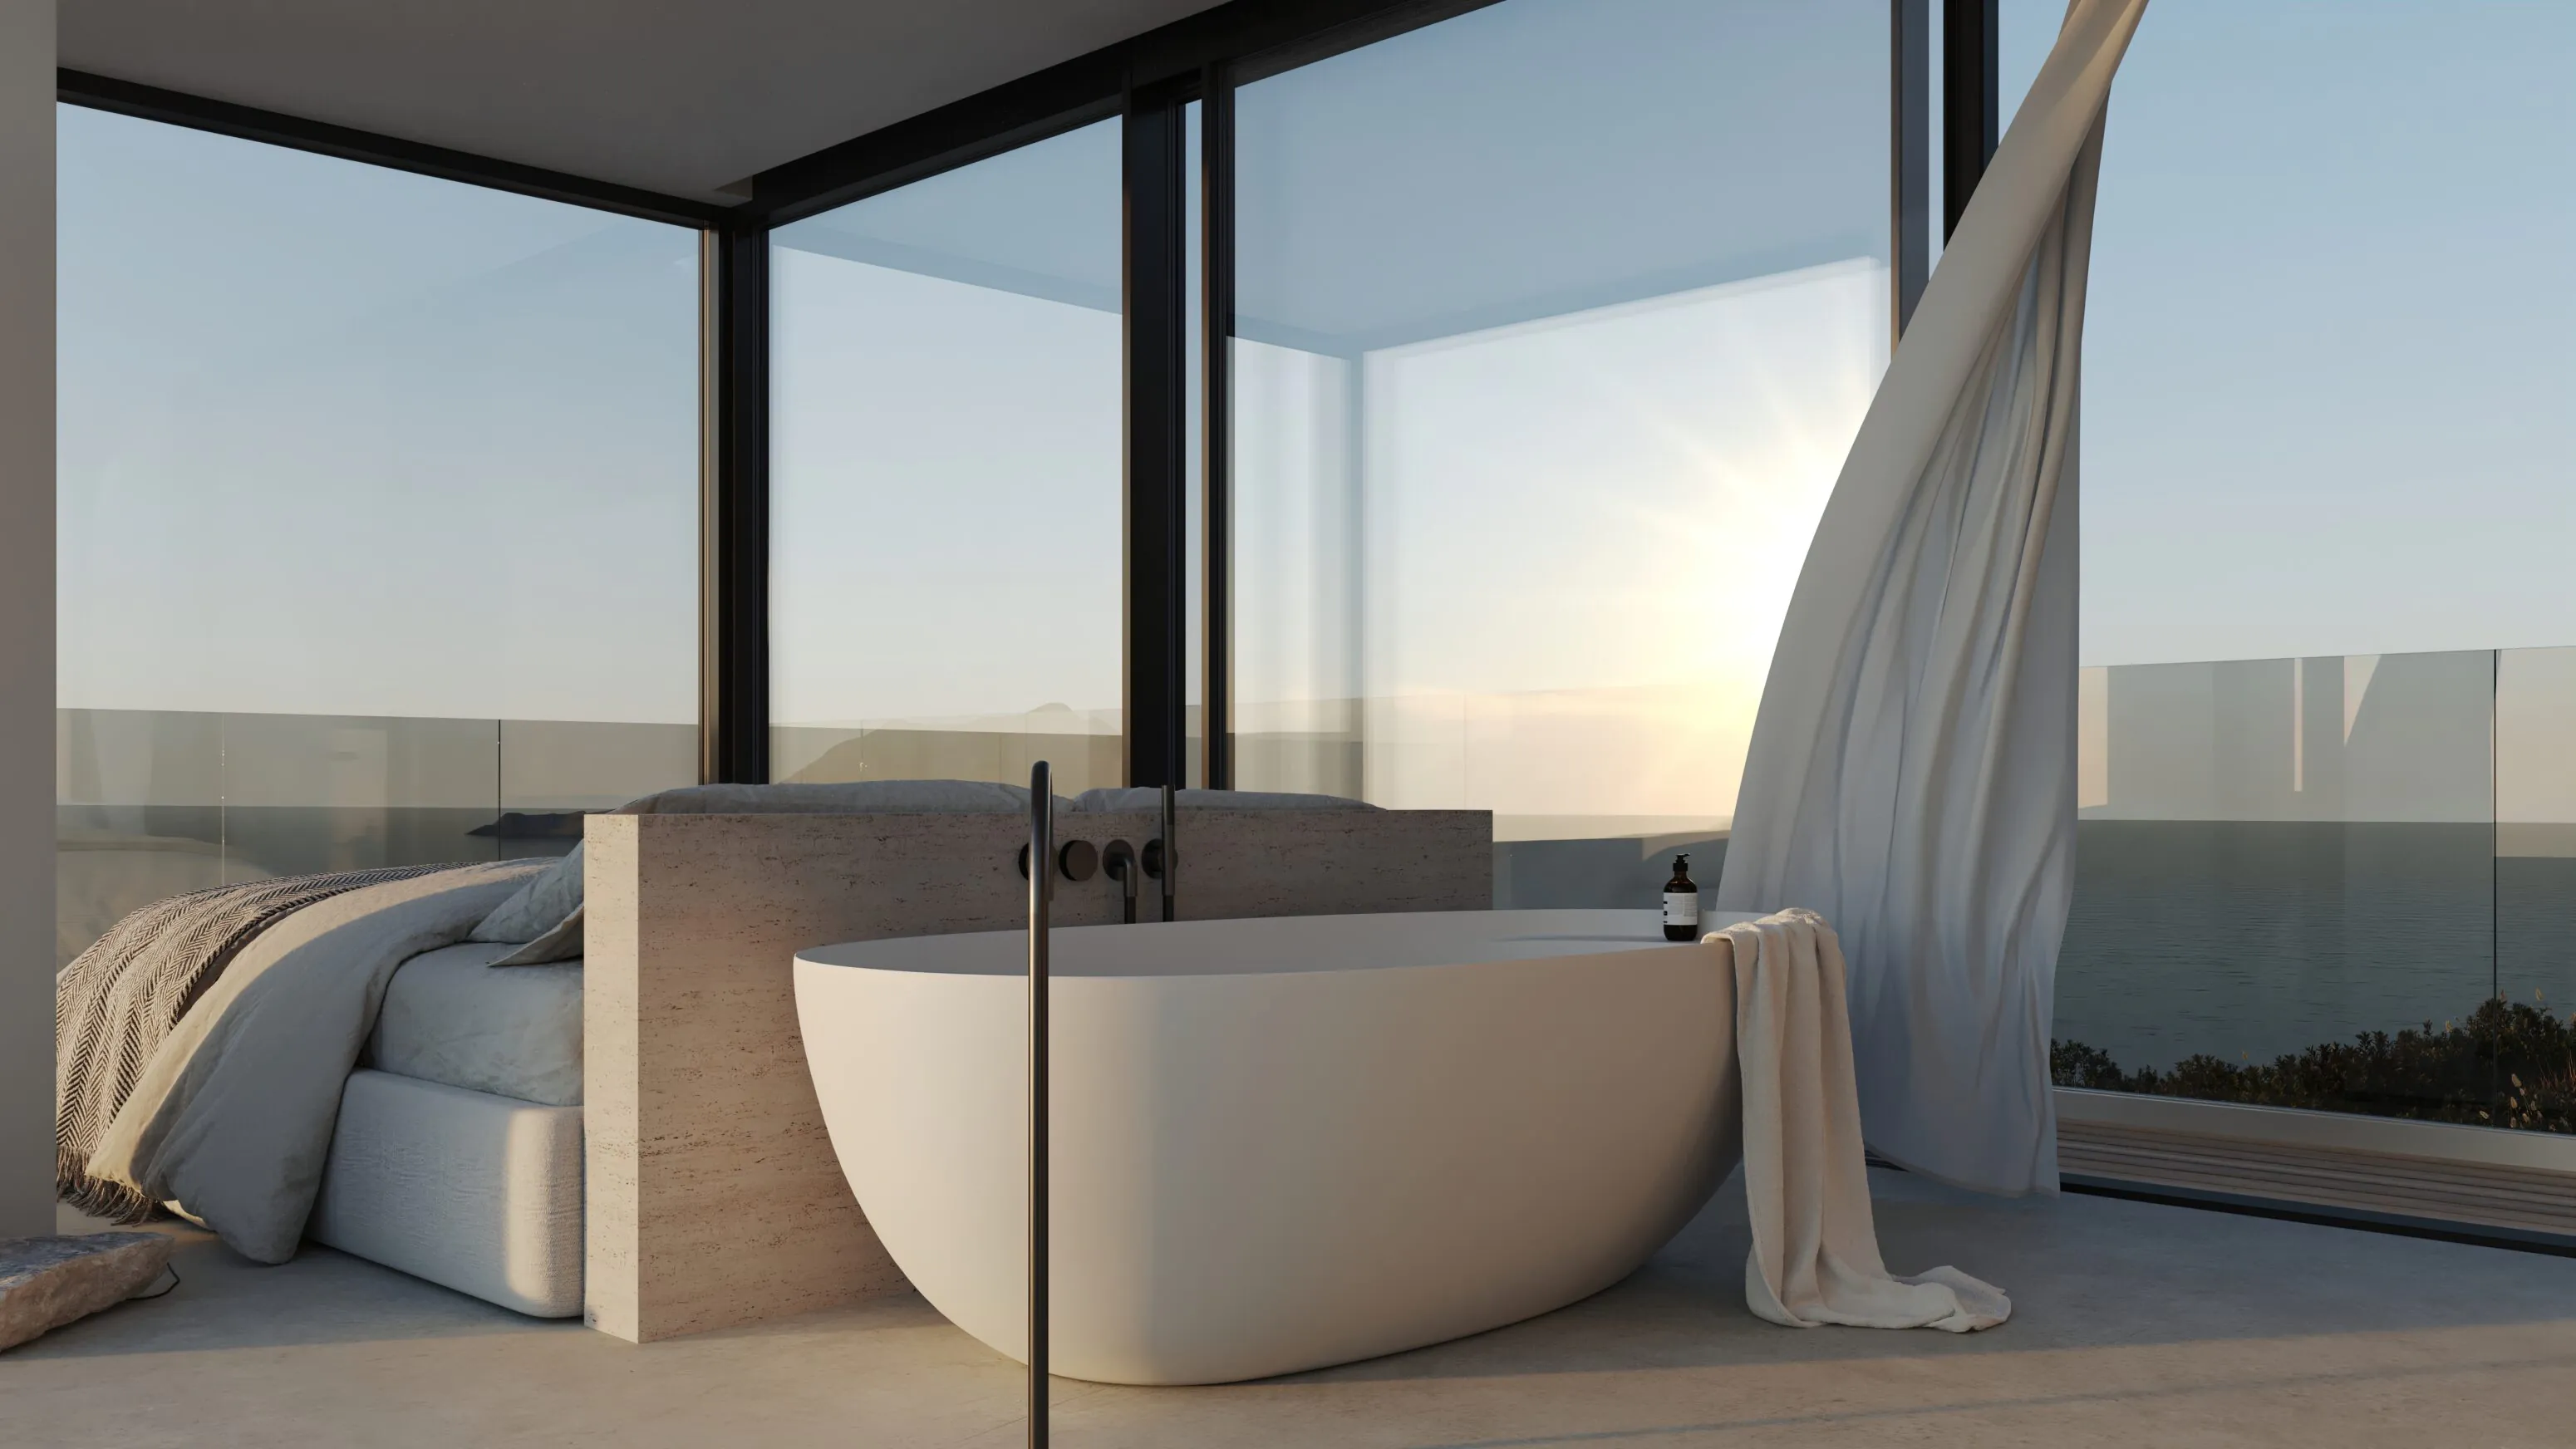 Cote d'Azur Villa спальня-ванная комната вид сзади